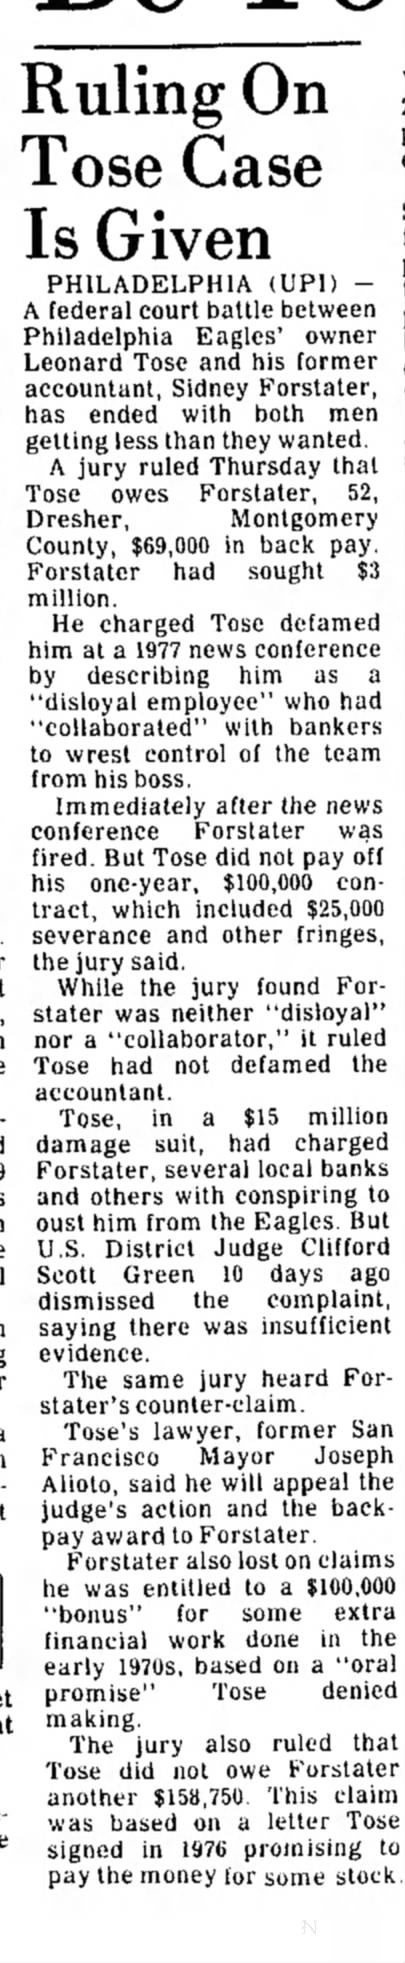 The Daily News, Huntington, PA; 11 July 1980